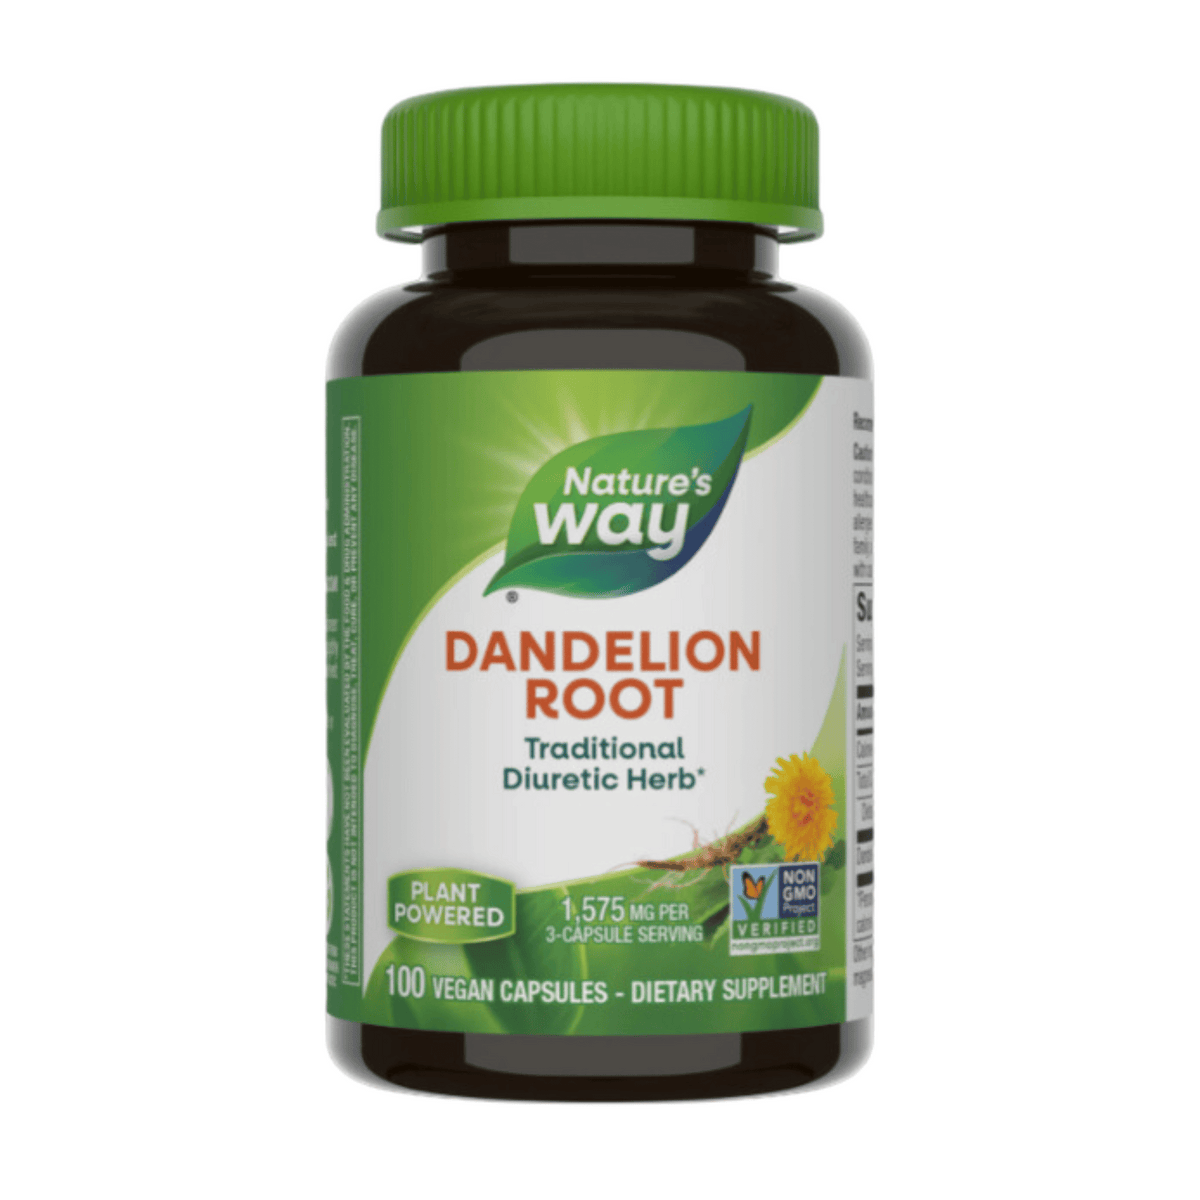 Primary Image of Dandelion Root